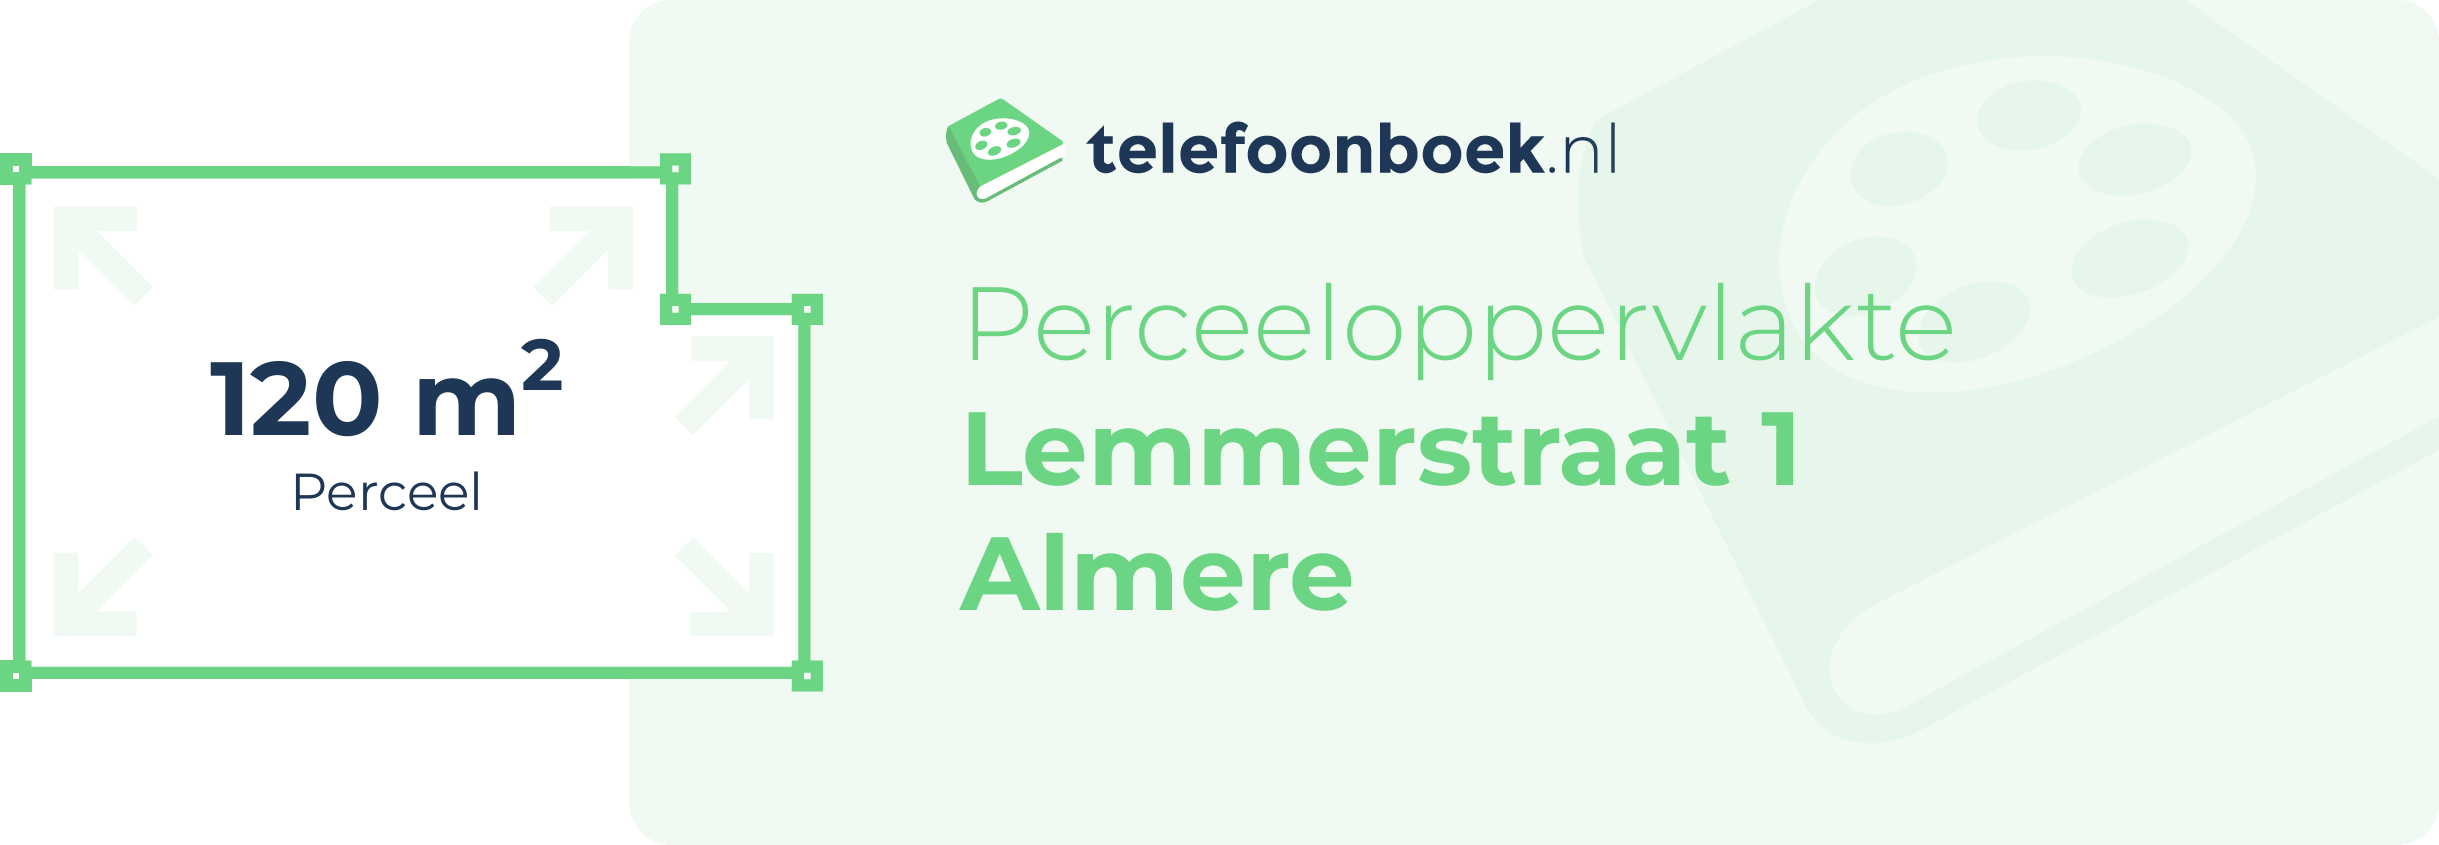 Perceeloppervlakte Lemmerstraat 1 Almere